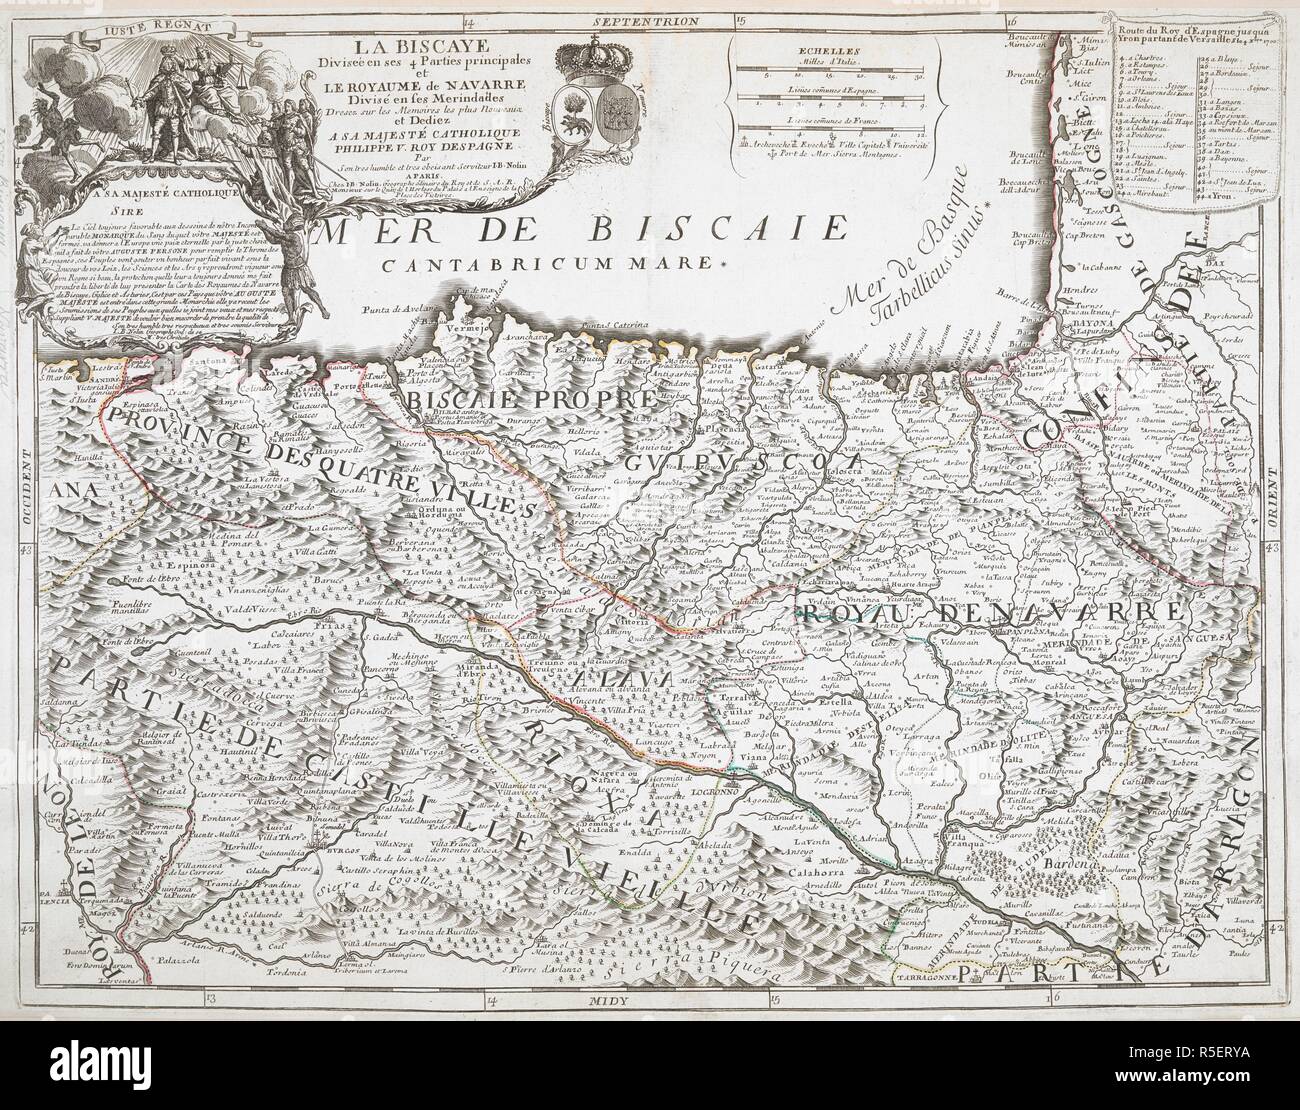 A map of Biscay and the Kingdom of Navarre. La Biscaye ... et le Royaume de Navarre ... par Nolin. Source: Maps K.Top.72.59. Language: French. Stock Photo